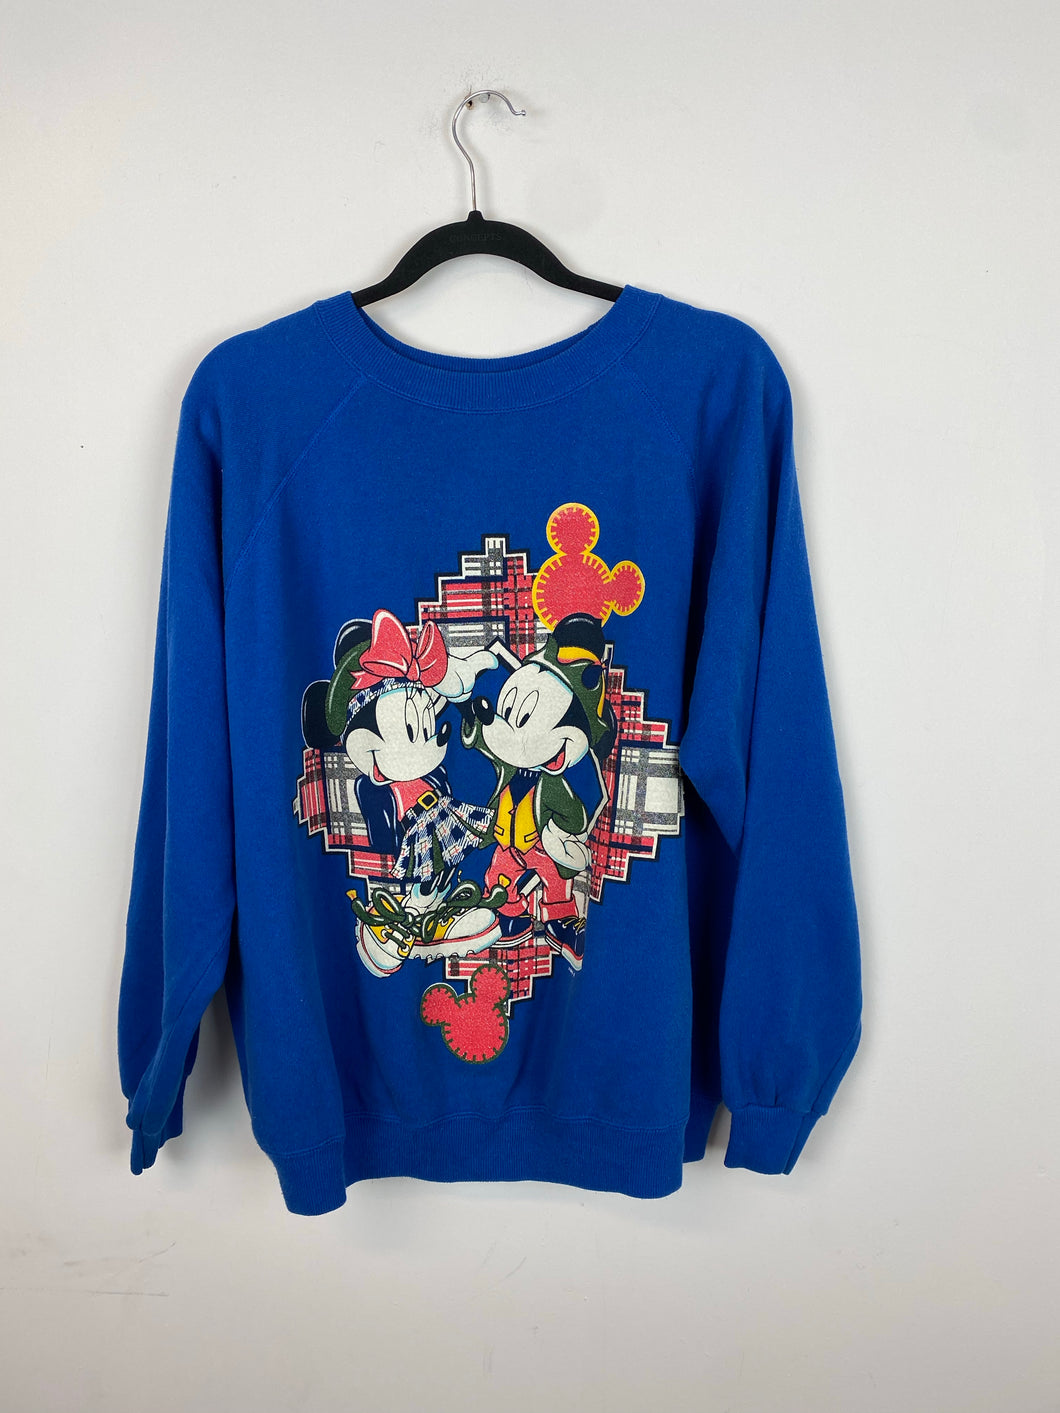 Vintage Mickey and Minnie crewneck - XS/S